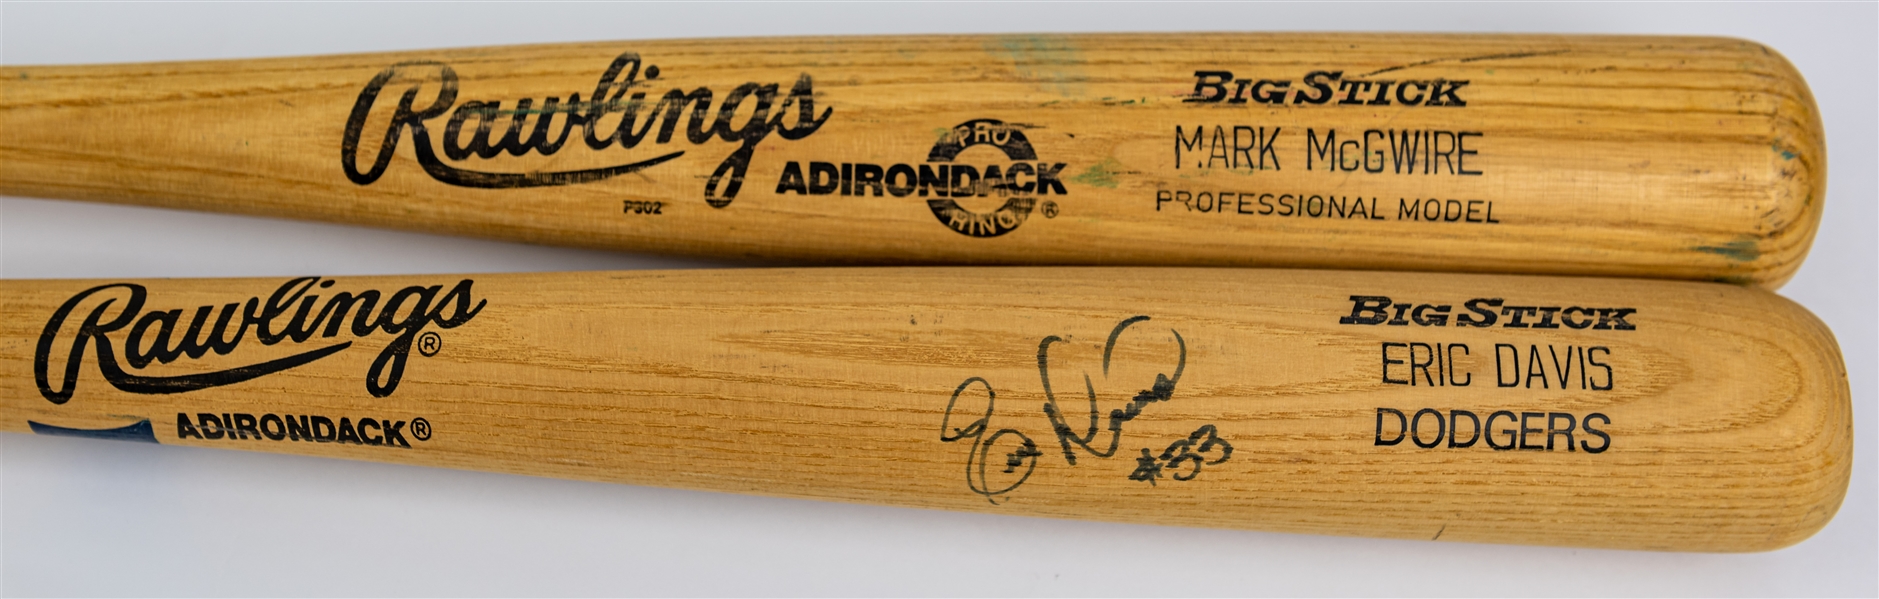 1987-93 Mark McGwire Eric Davis Rawlings Adirondack Professional Model Bat Collection - Lot of 2 w/ Davis Signed (MEARS LOA/JSA)